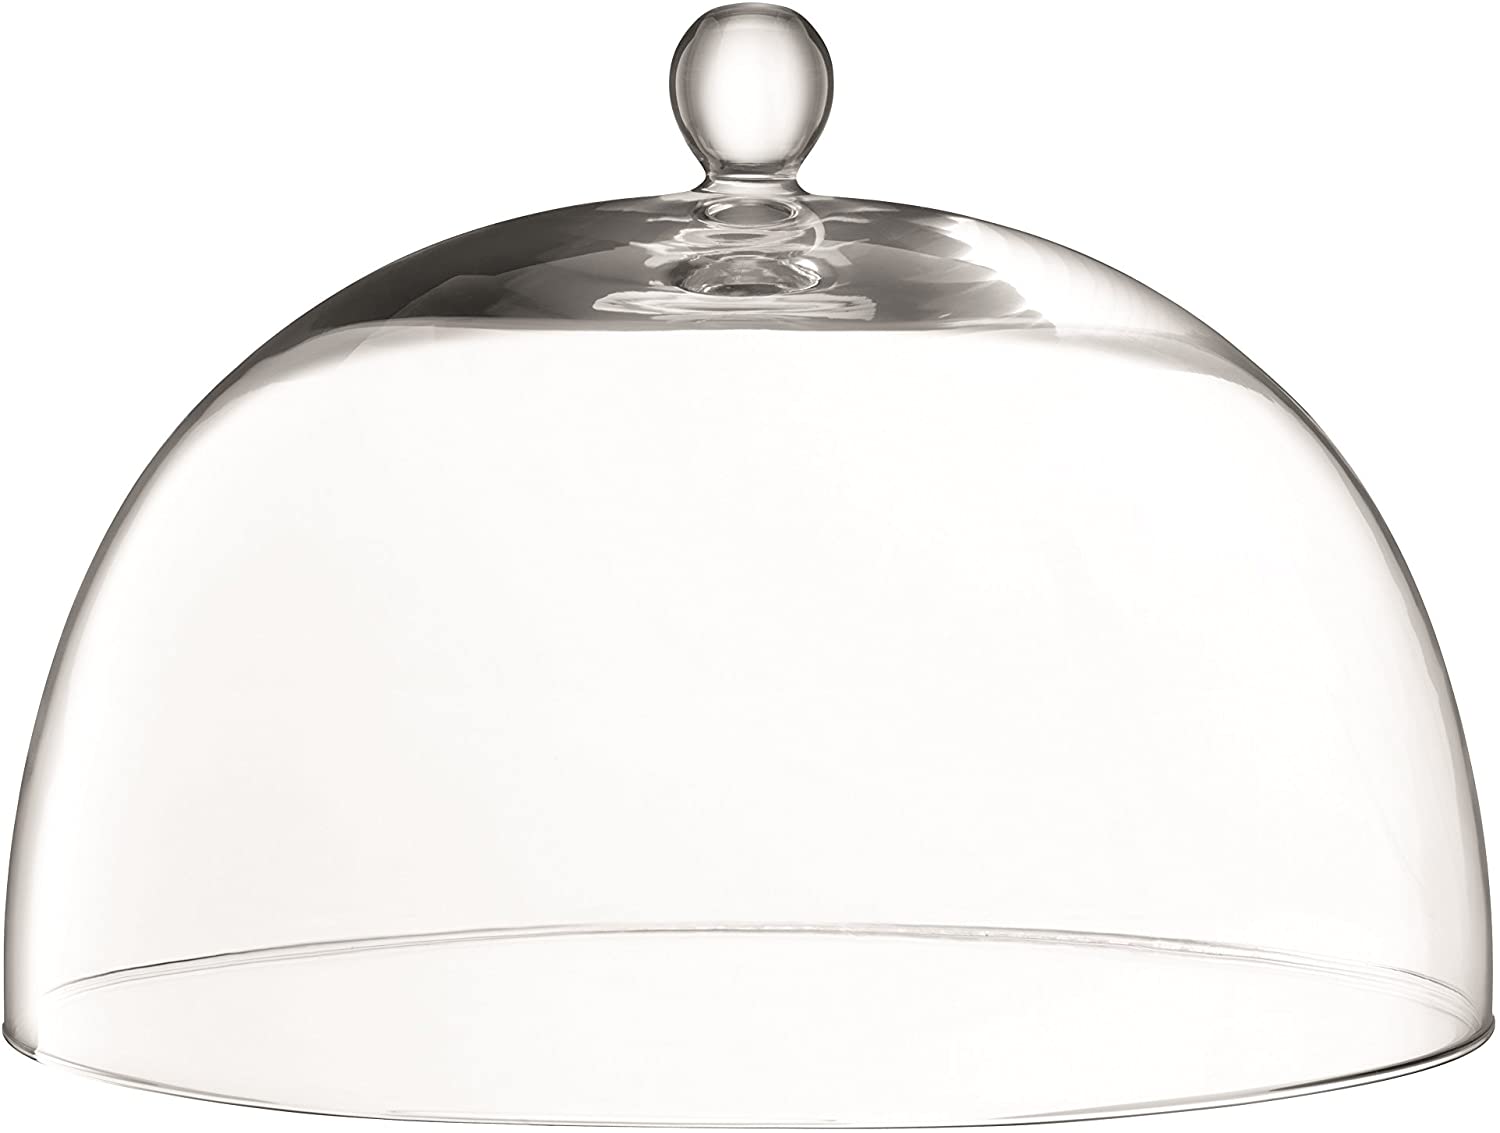 LSA Vienna Clear Glass Dome Lid Open amendments 30 CM